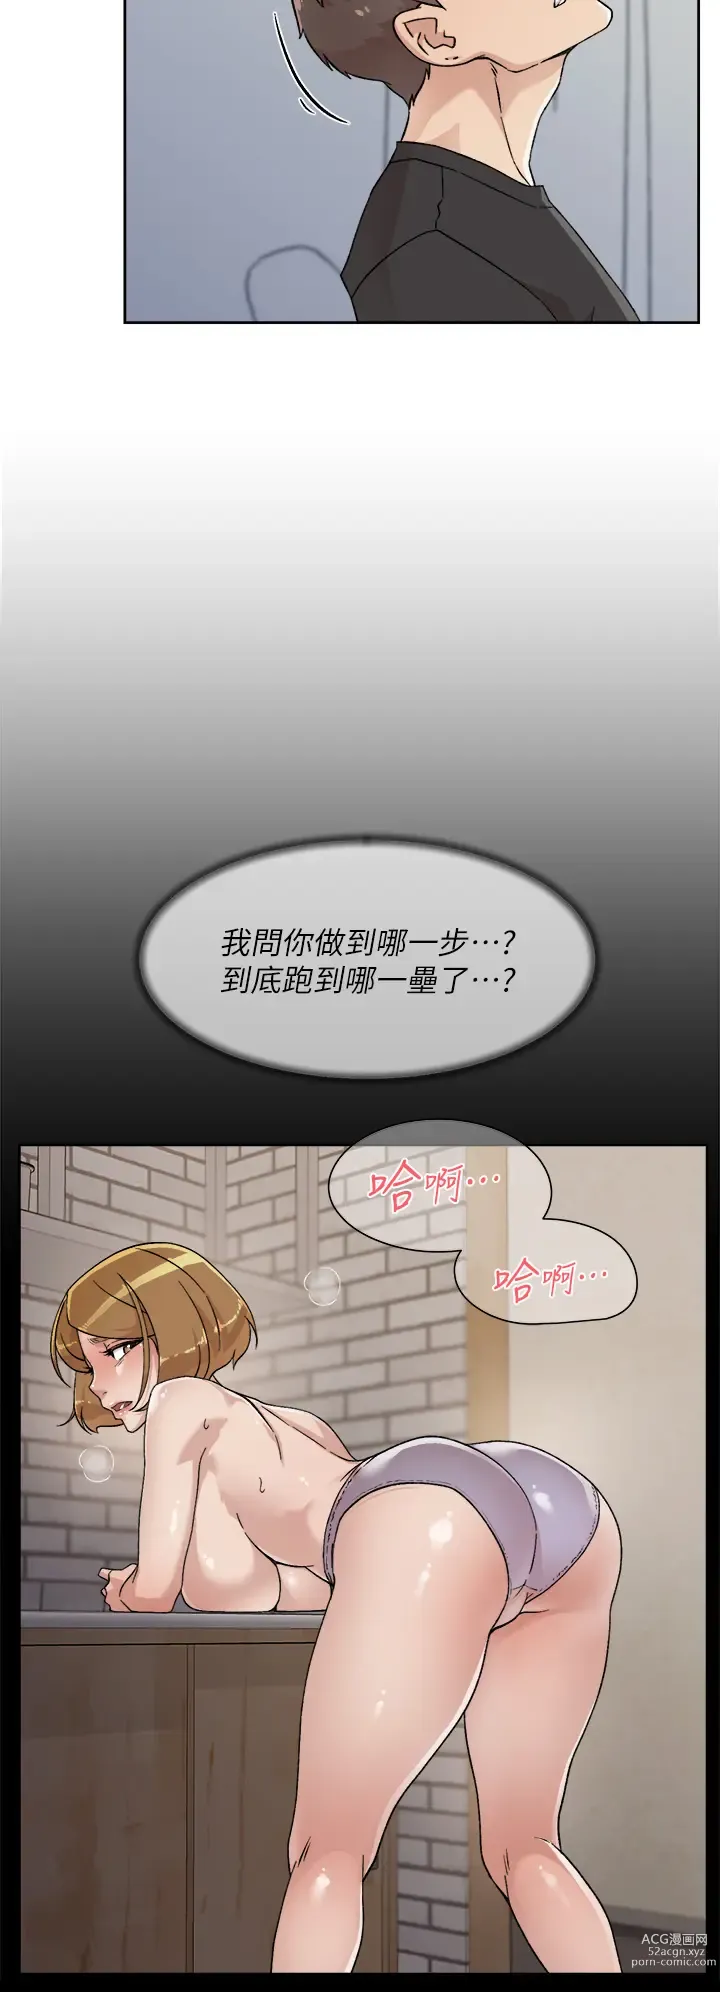 Page 945 of manga 好友的私生活